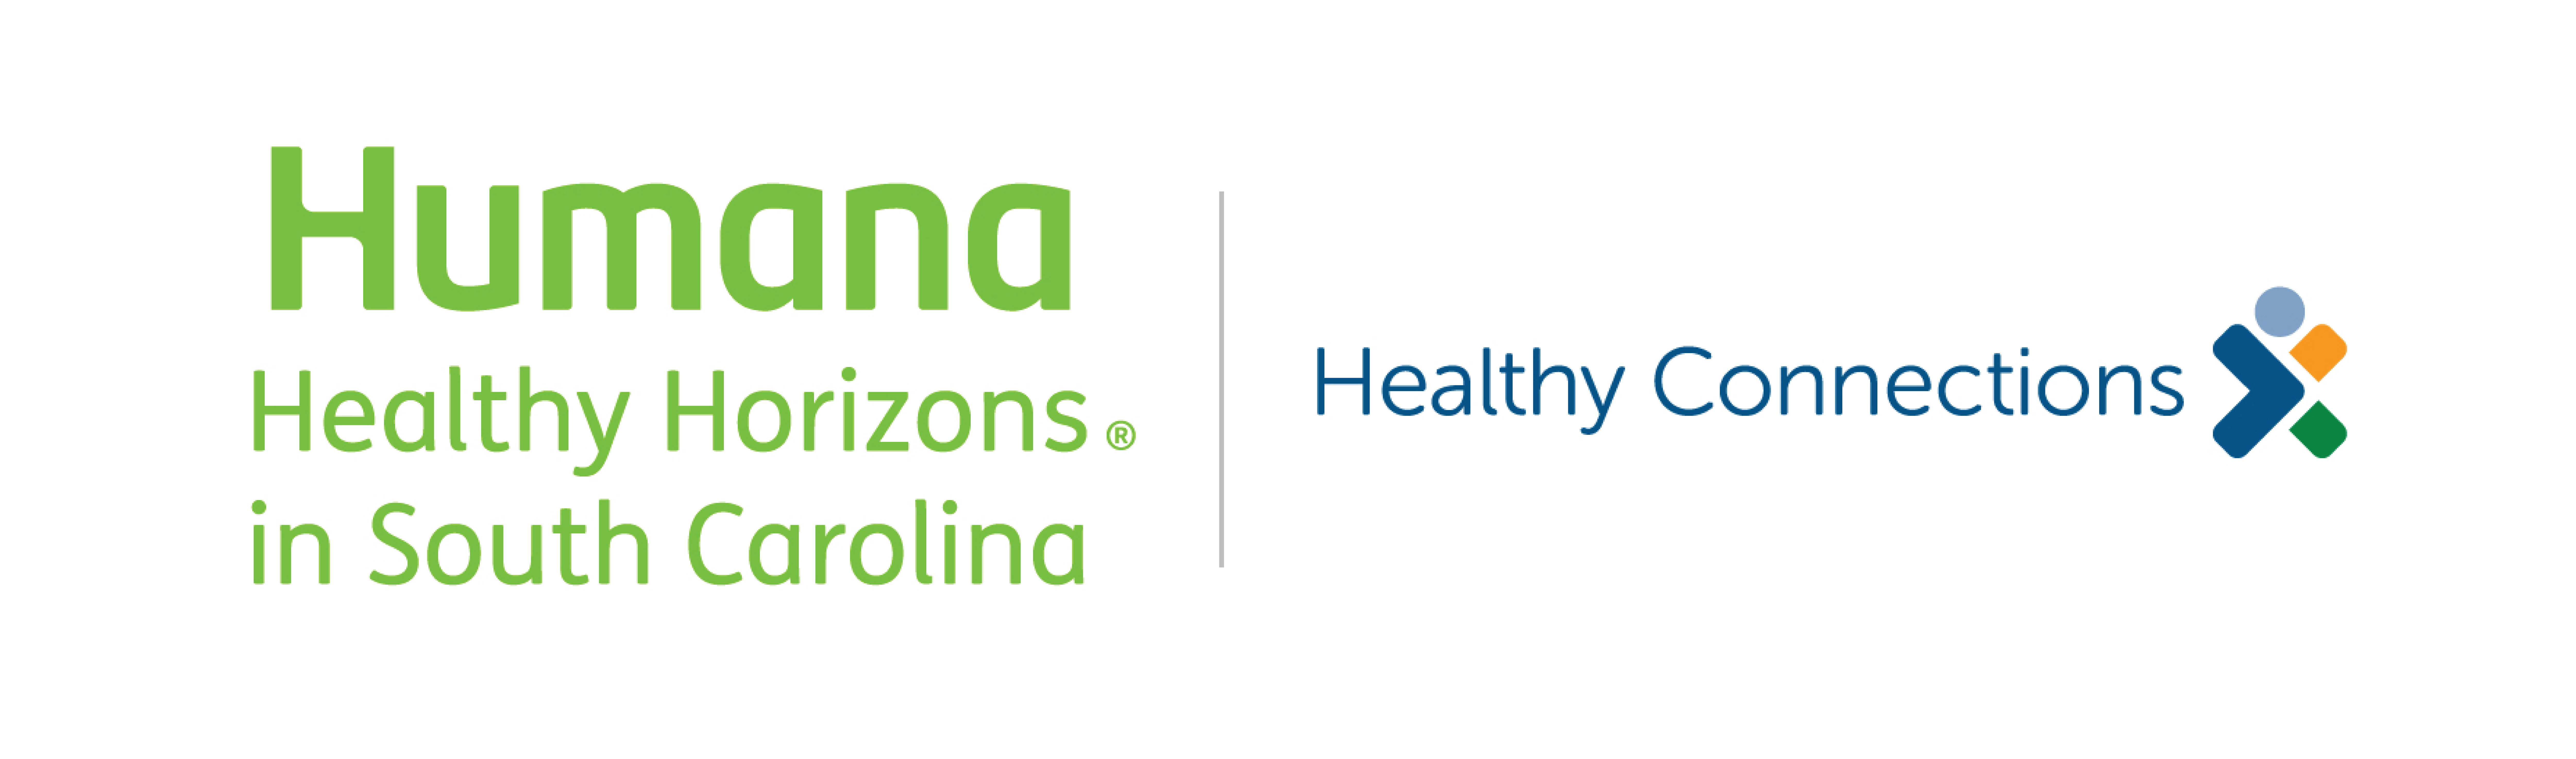 Humana_HealthyConnections_NewLogo